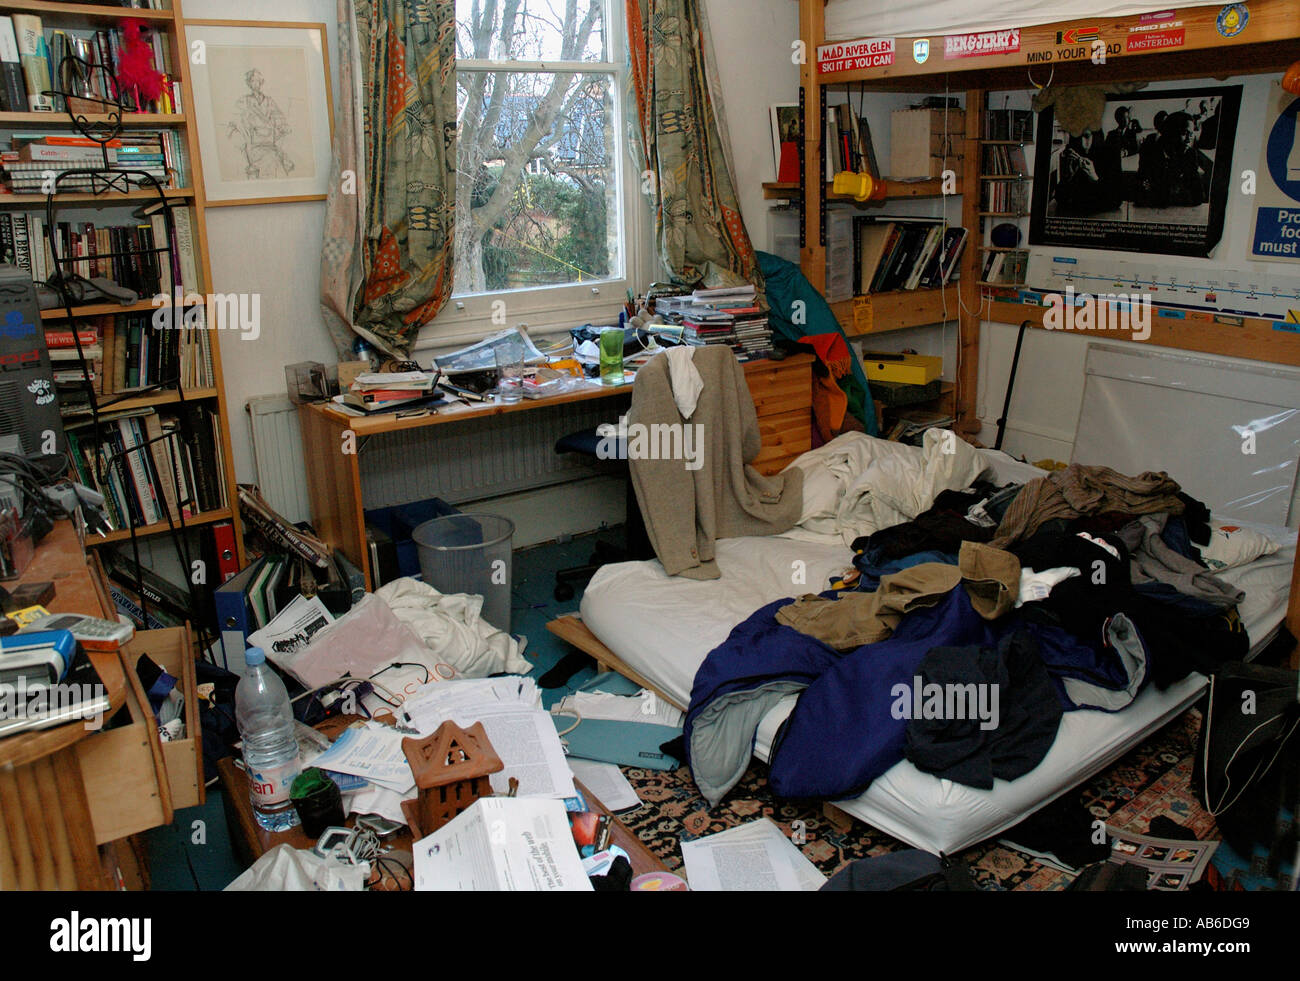 Messy Teen Rooms 5